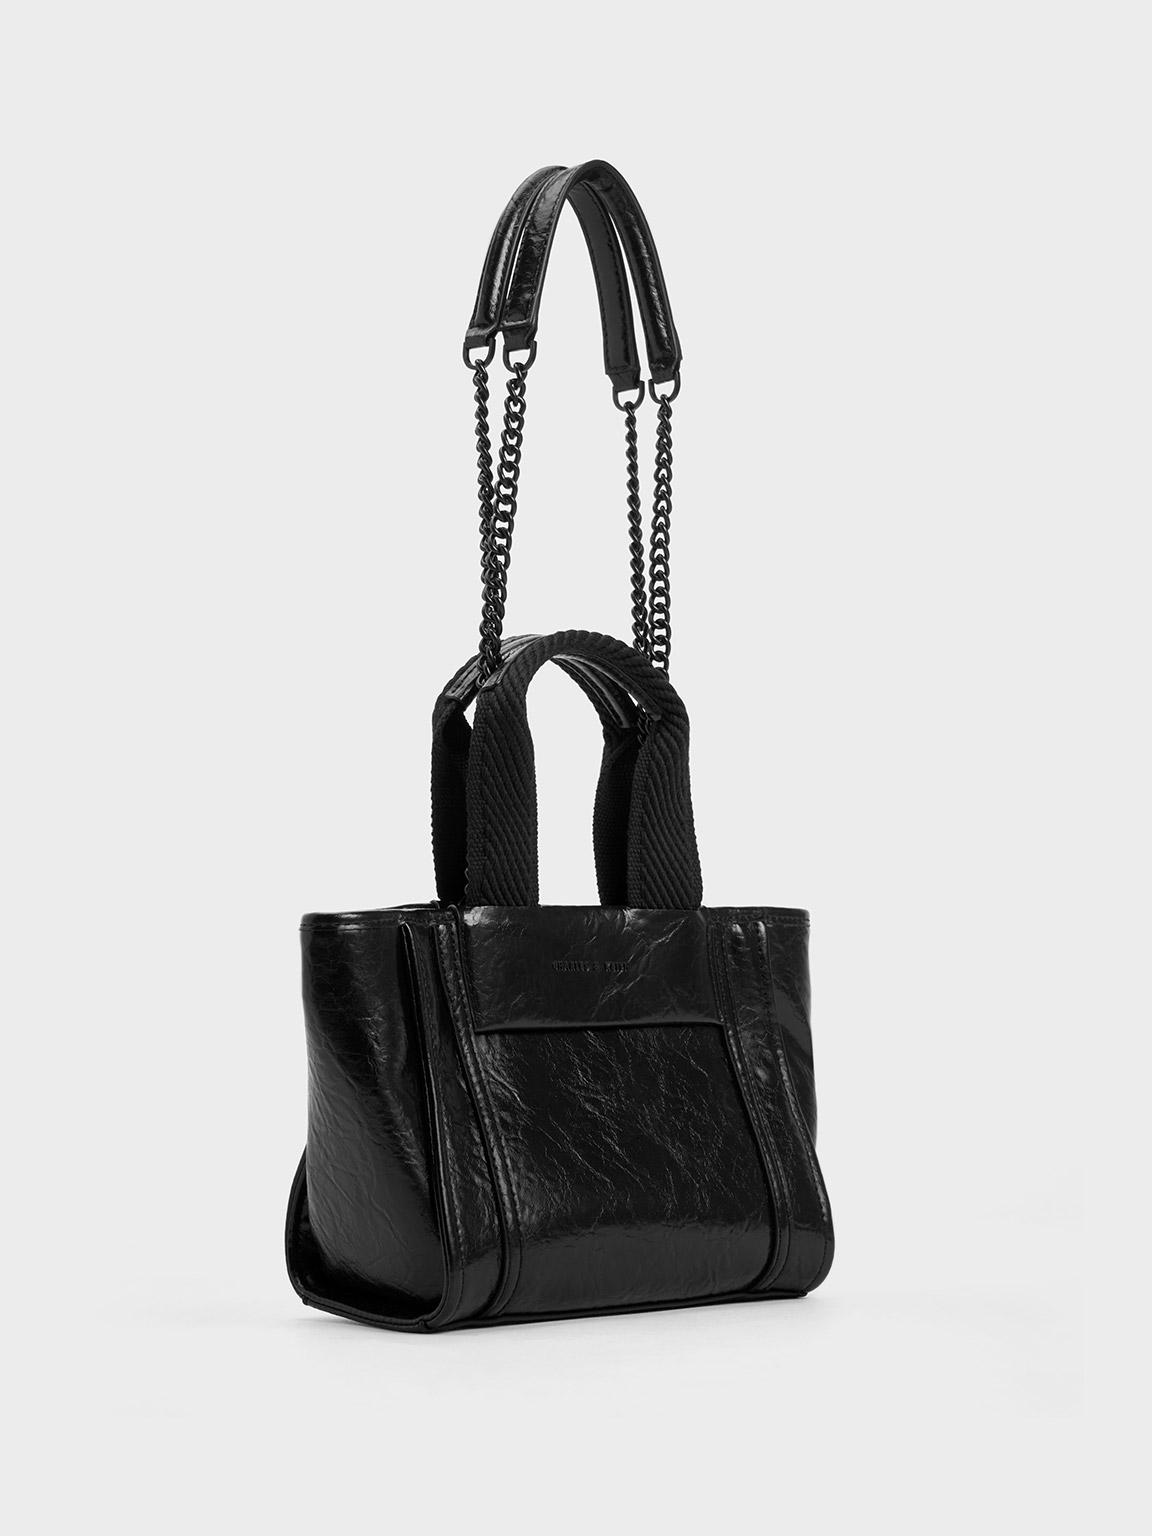 Charles & Keith - Women's Croc-effect Chain Strap Crossbody Bag, Black, S